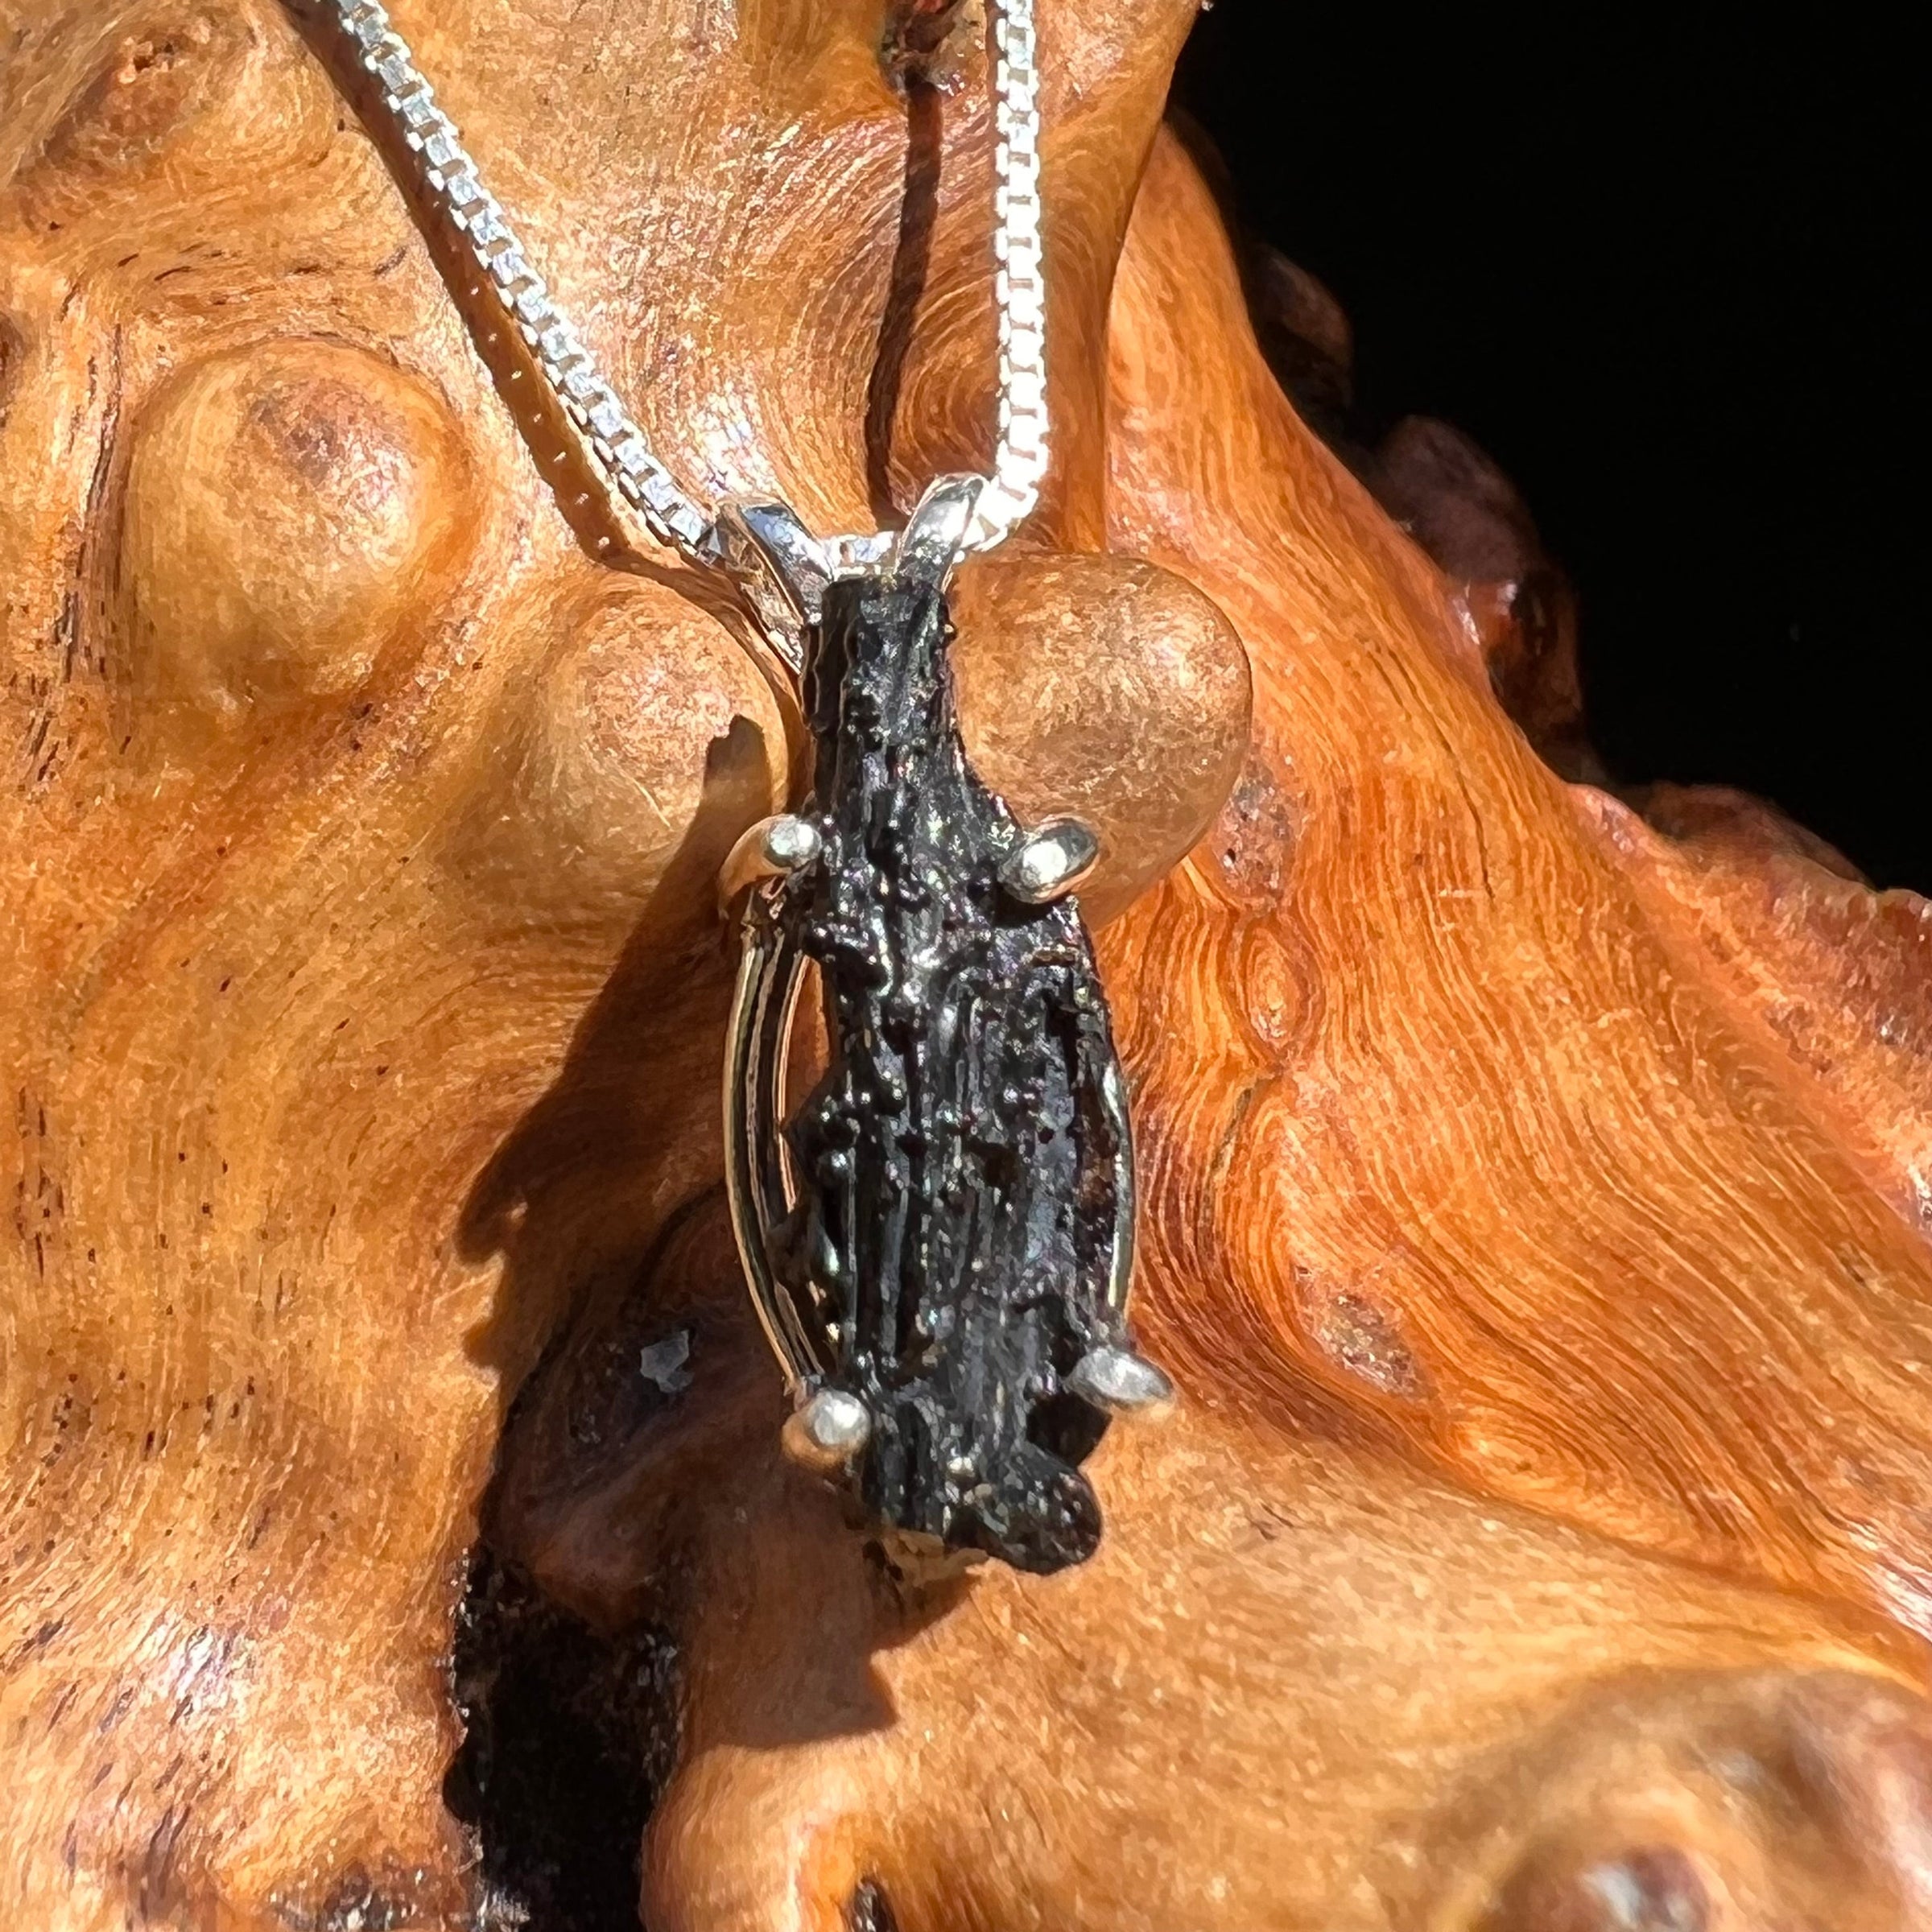 Irgizite Tektite Pendant Necklace Sterling Silver #2530-Moldavite Life